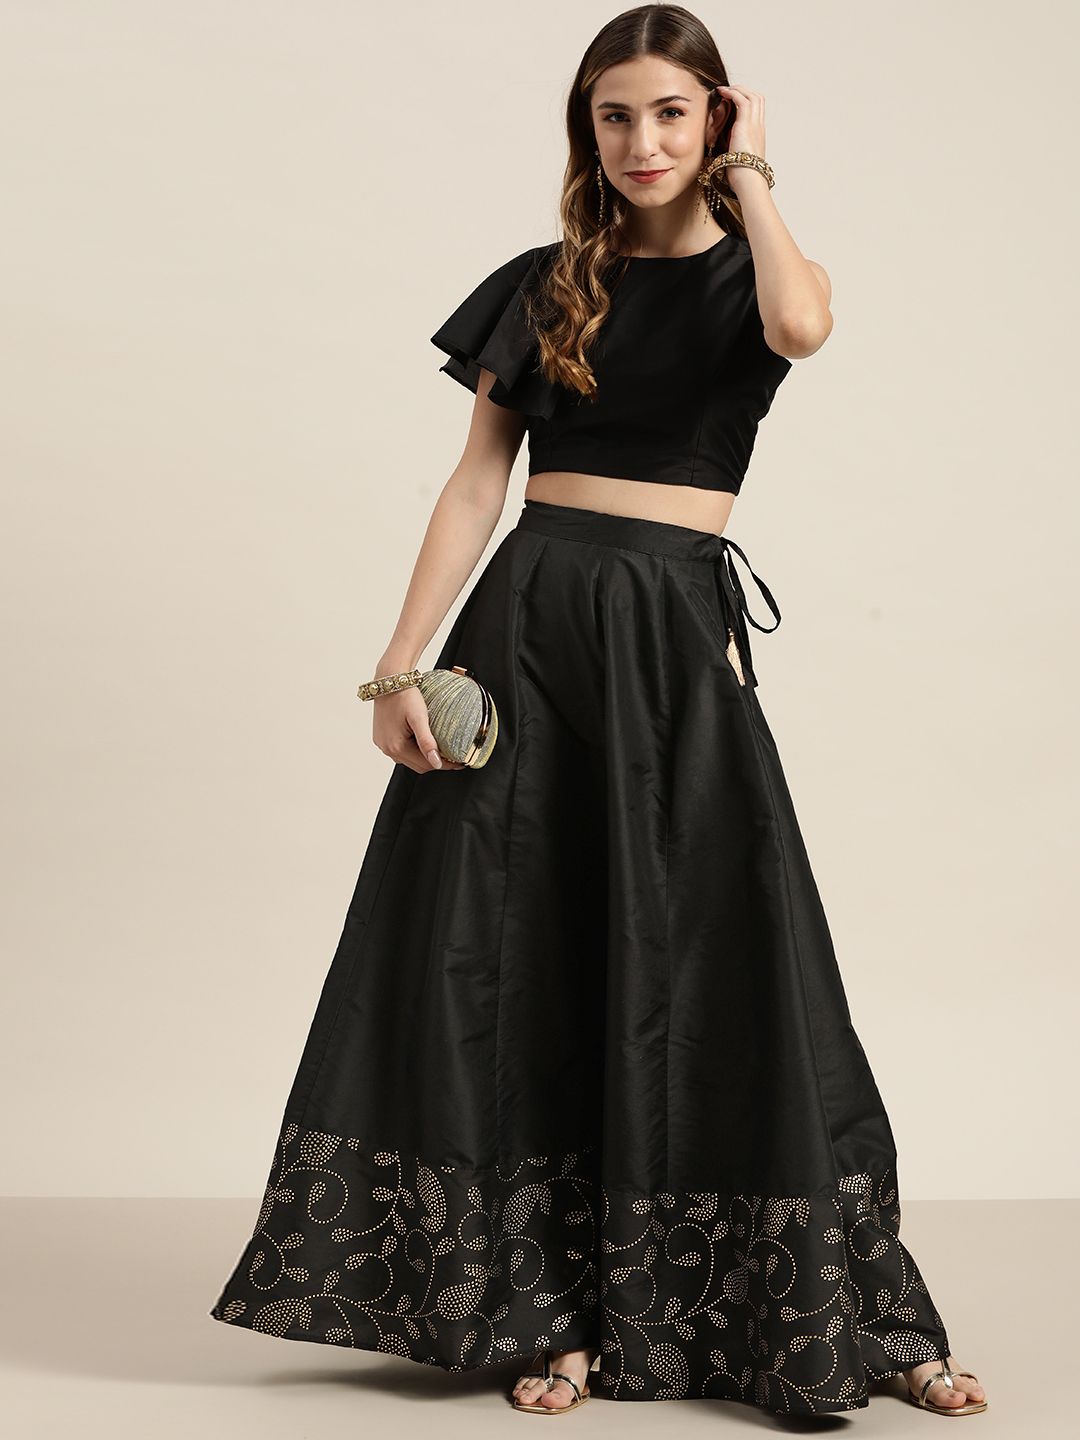 Shae by SASSAFRAS Women Stylish Black Sleek Skirt Price in India